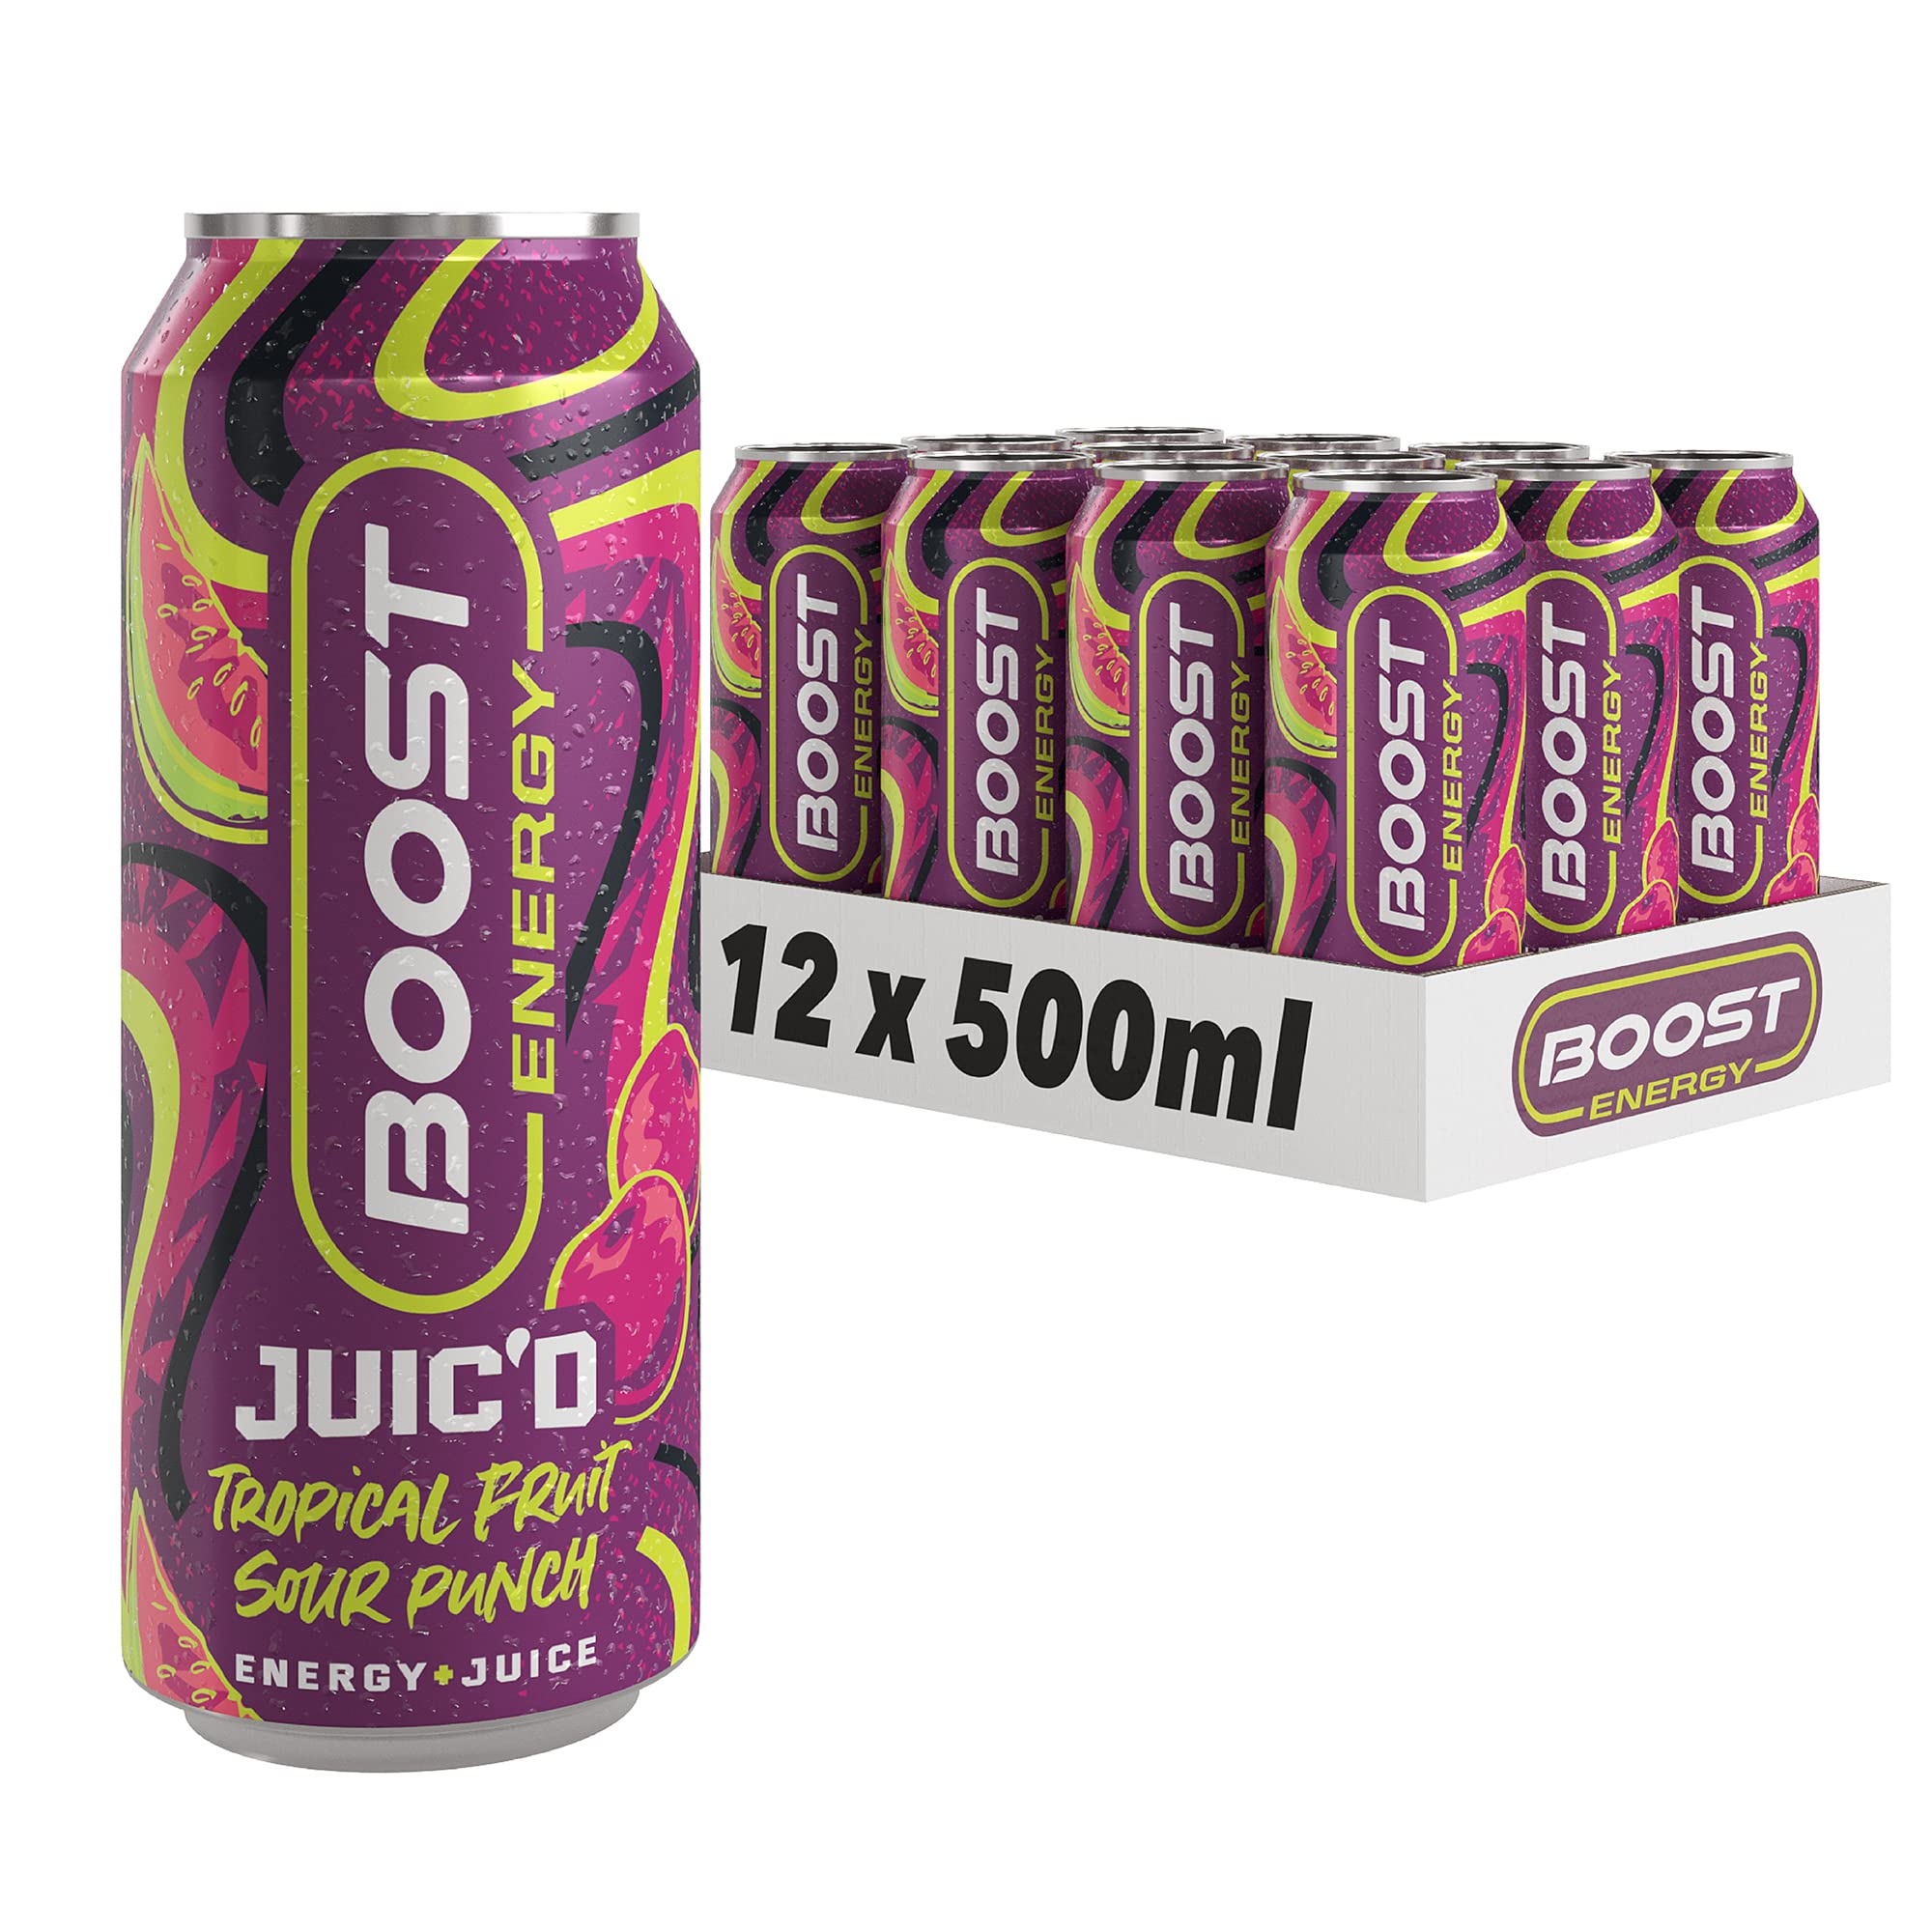 Boost Energy Juic'd Tropical Fruit Sour Punch - 500ml Case of 12